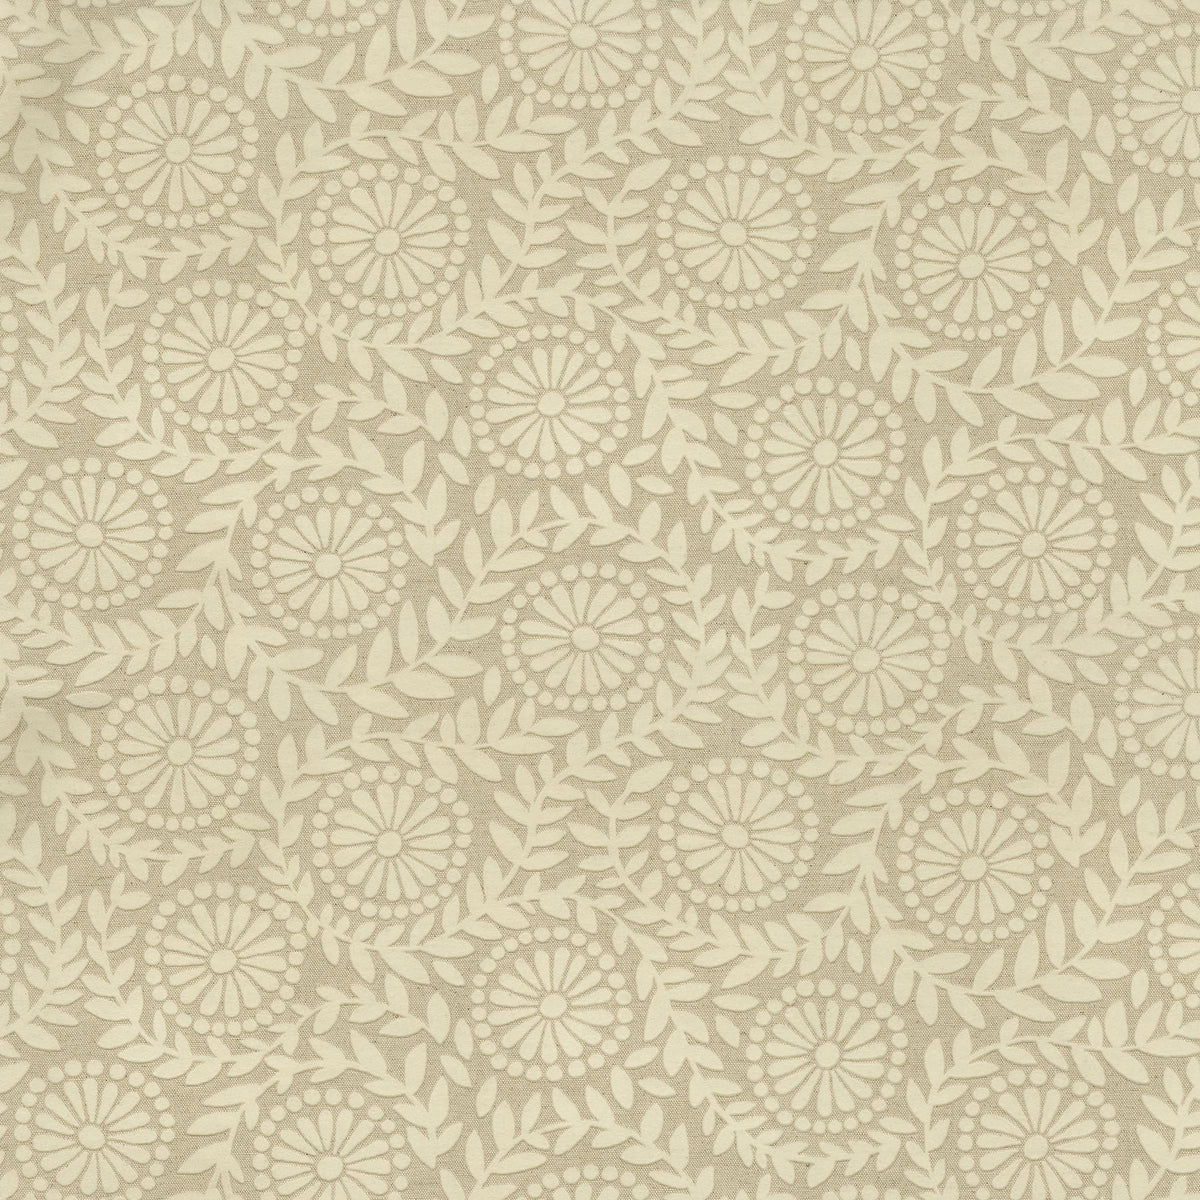 P/K Lifestyles Flock Botanical - Ivory 411641 Fabric Swatch